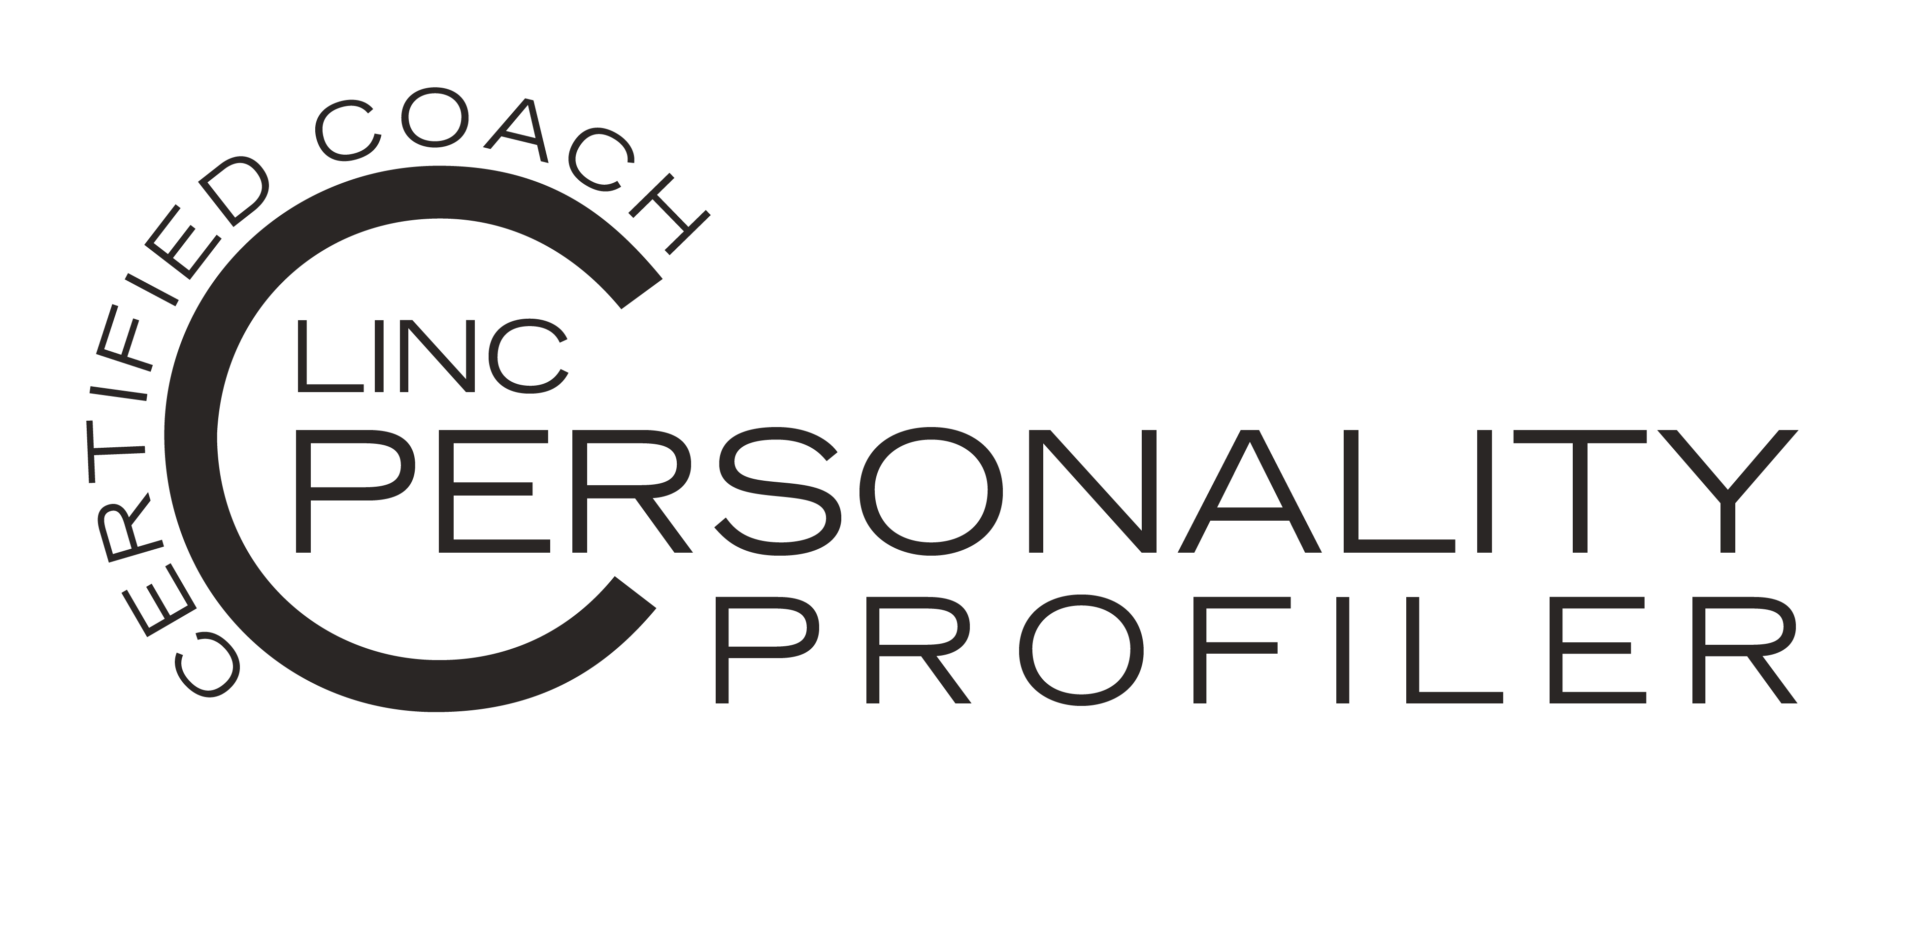 Logo LINC Personality Profiler Certified Coach